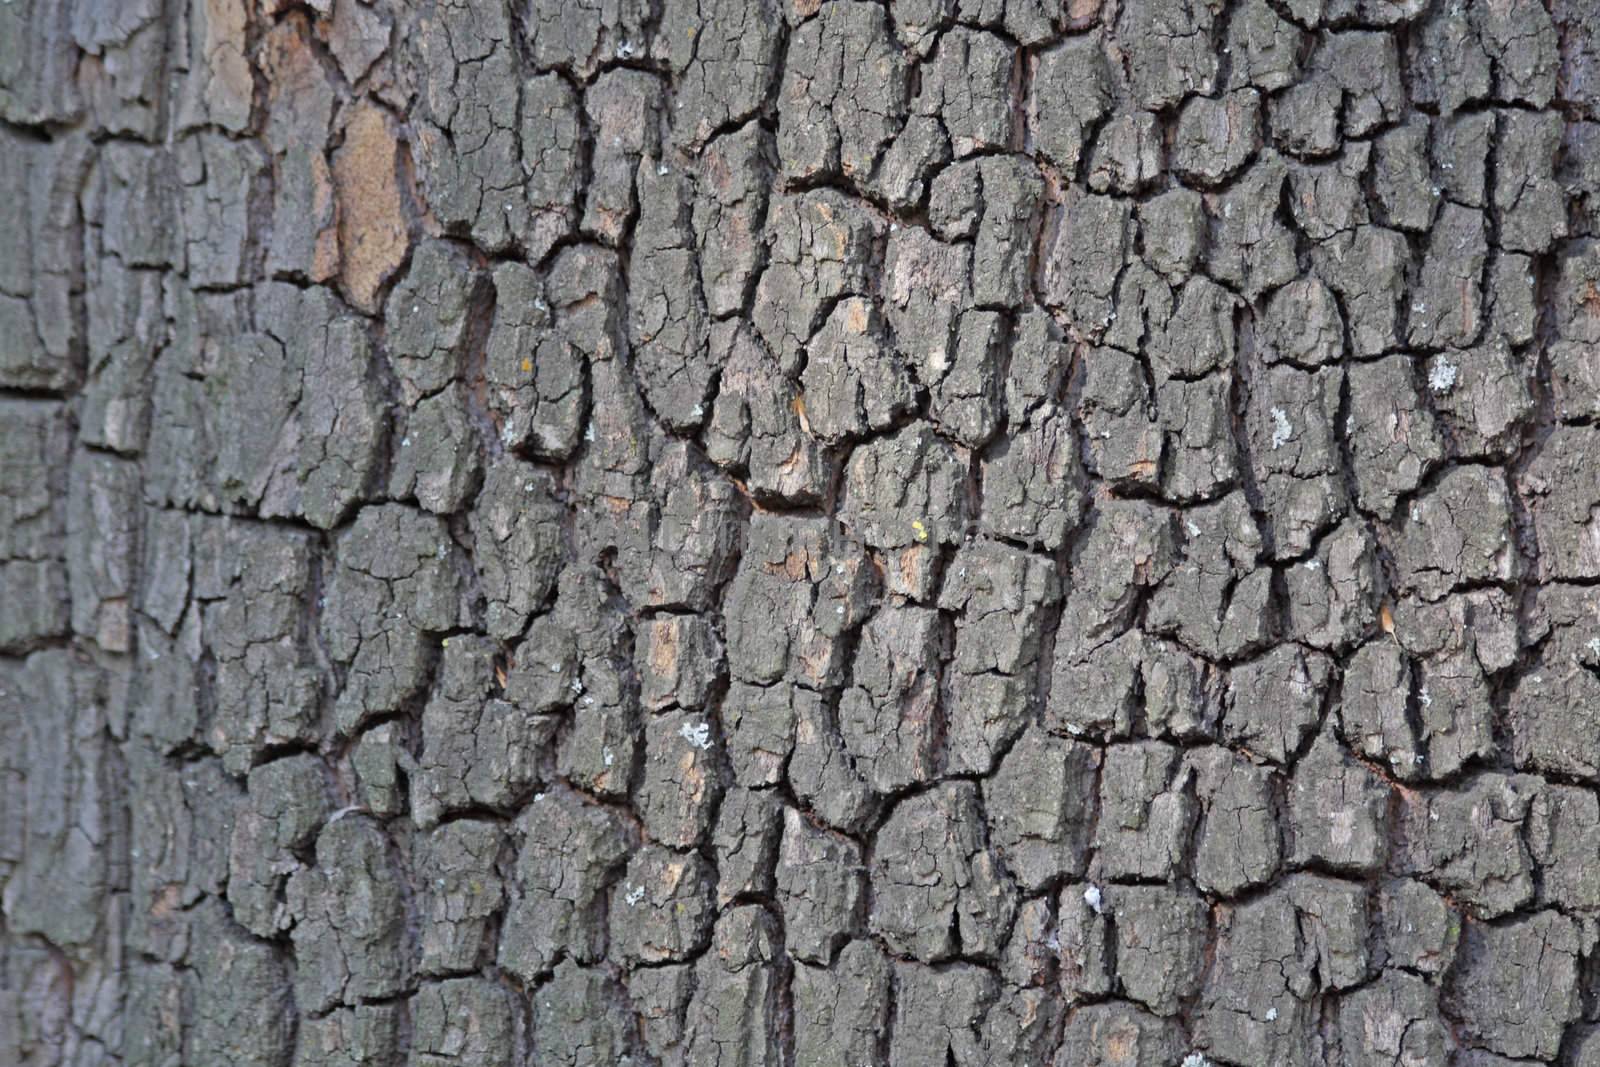 Chestnut tree bark by Lessadar